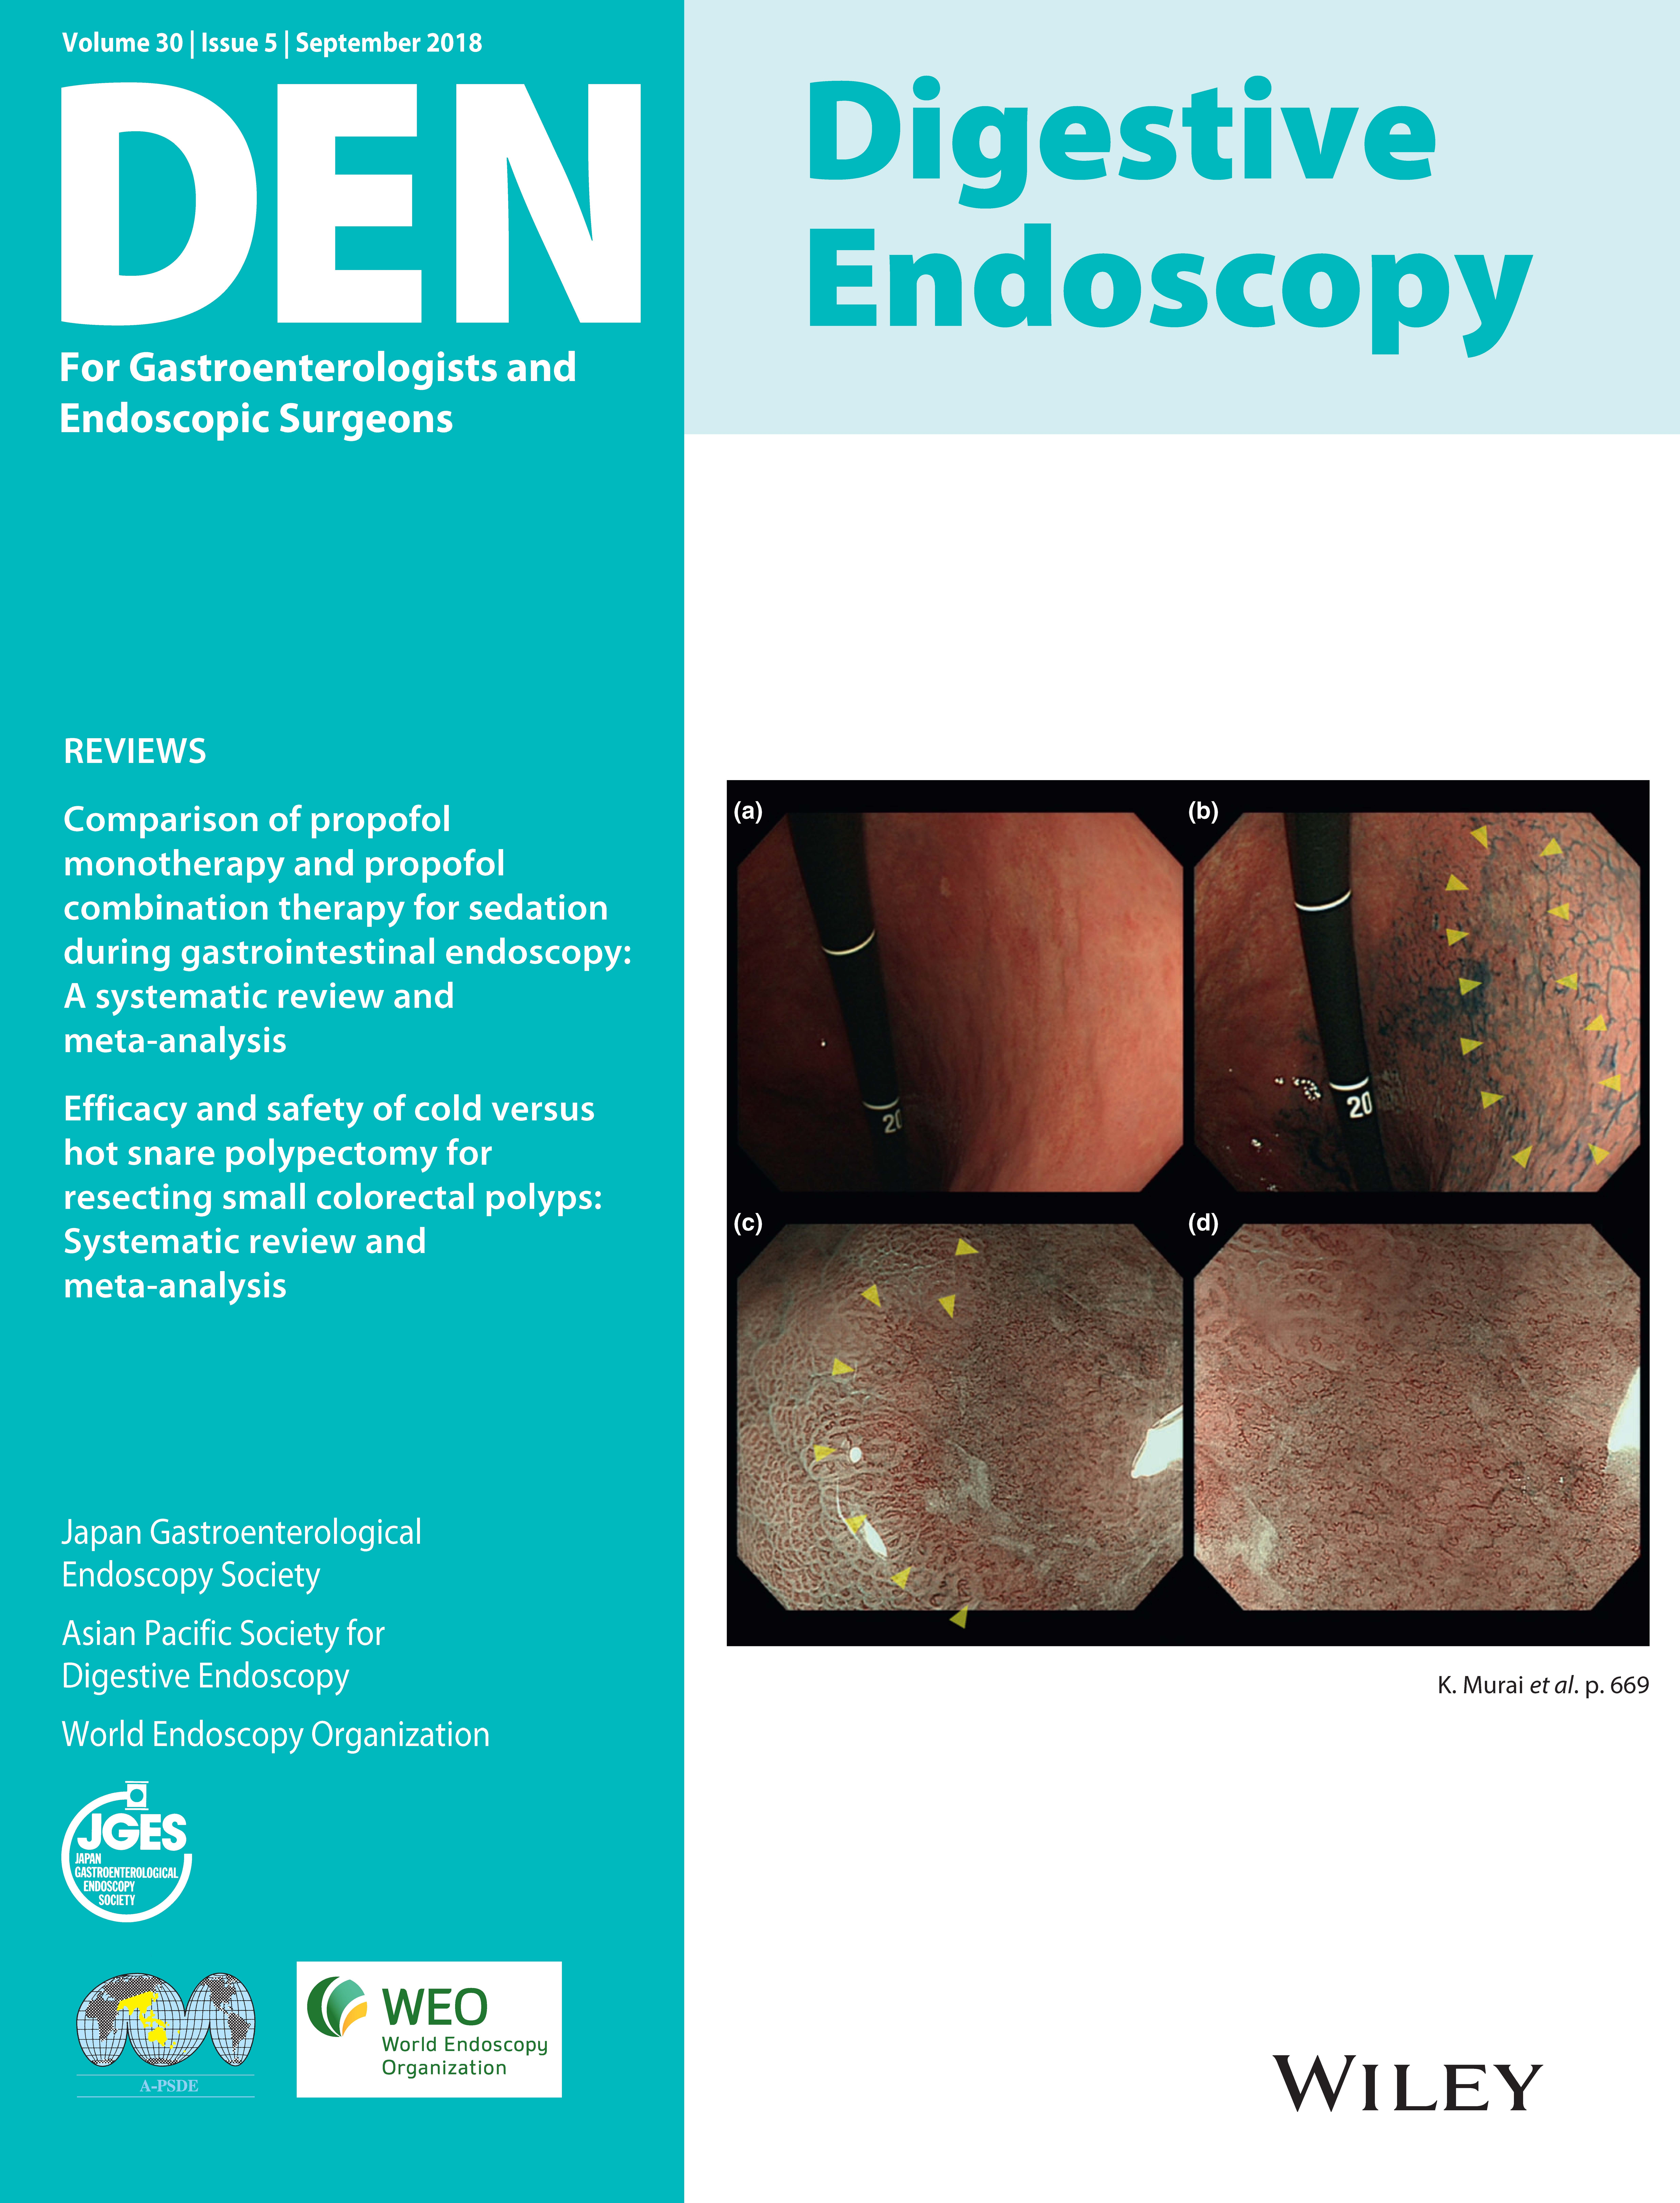 Digestive Endoscopy Vol30-5